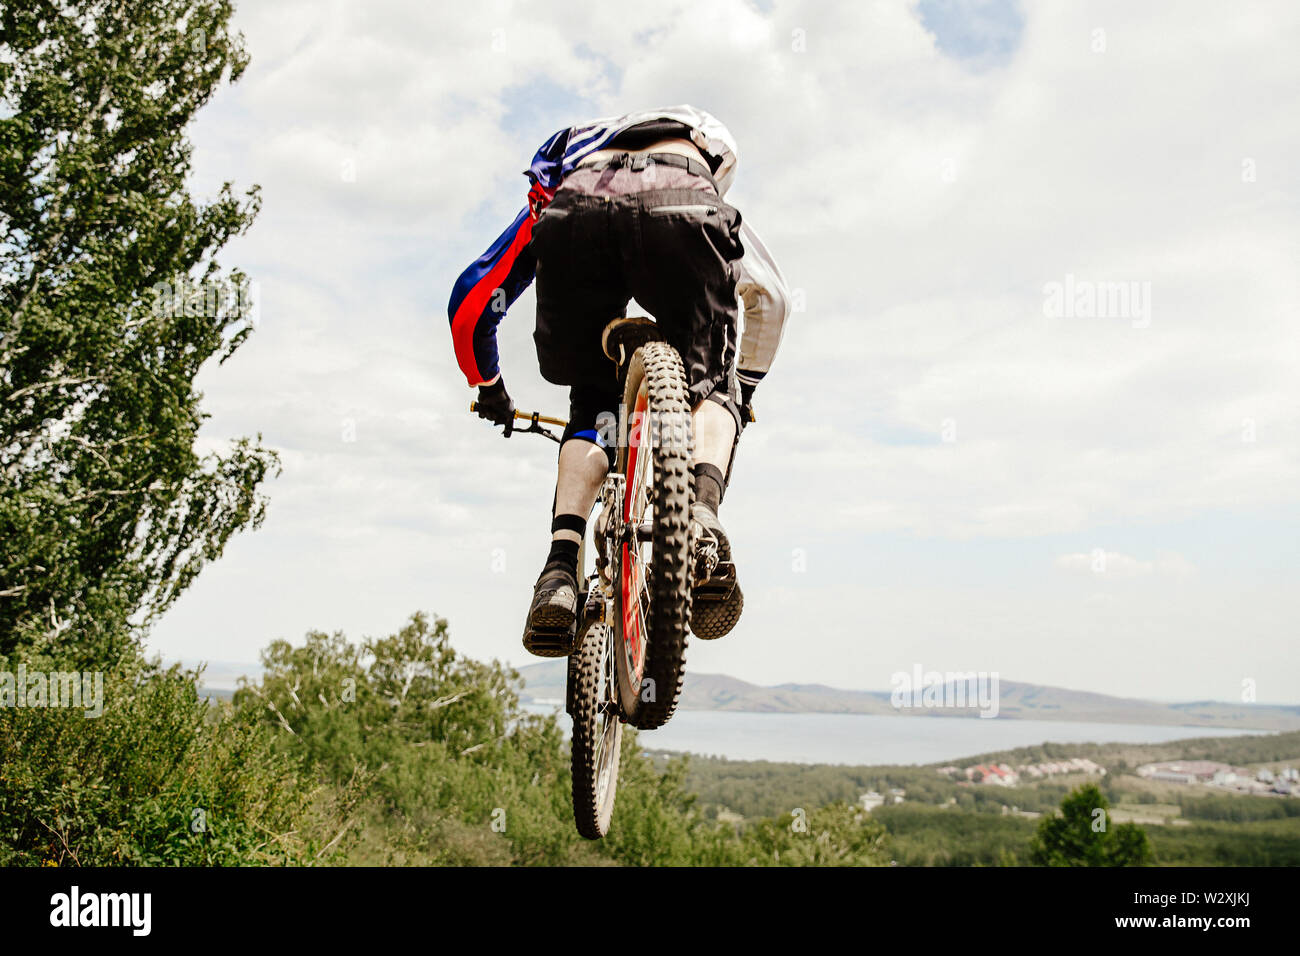 back dh rider jumping in downhill mountain biking Stock Photo